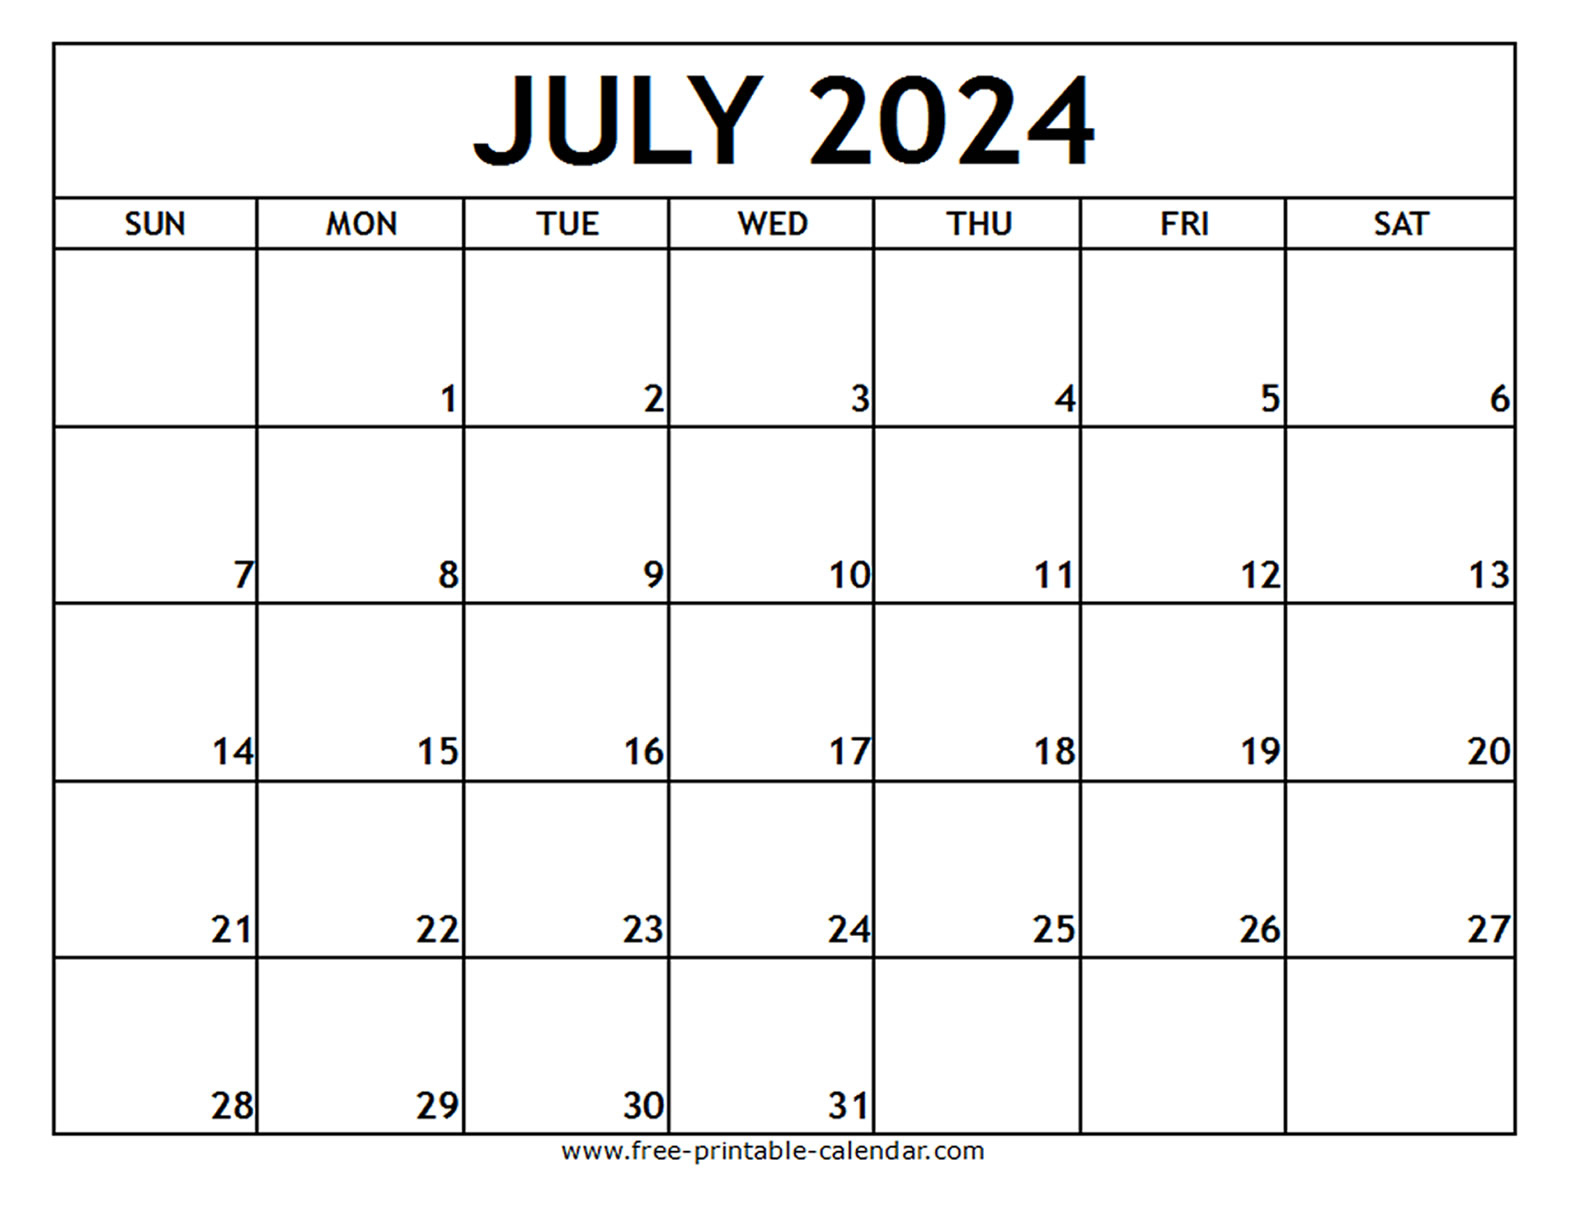 July 2024 Printable Calendar - Free-Printable-Calendar | Printable July Calendar Free 2024